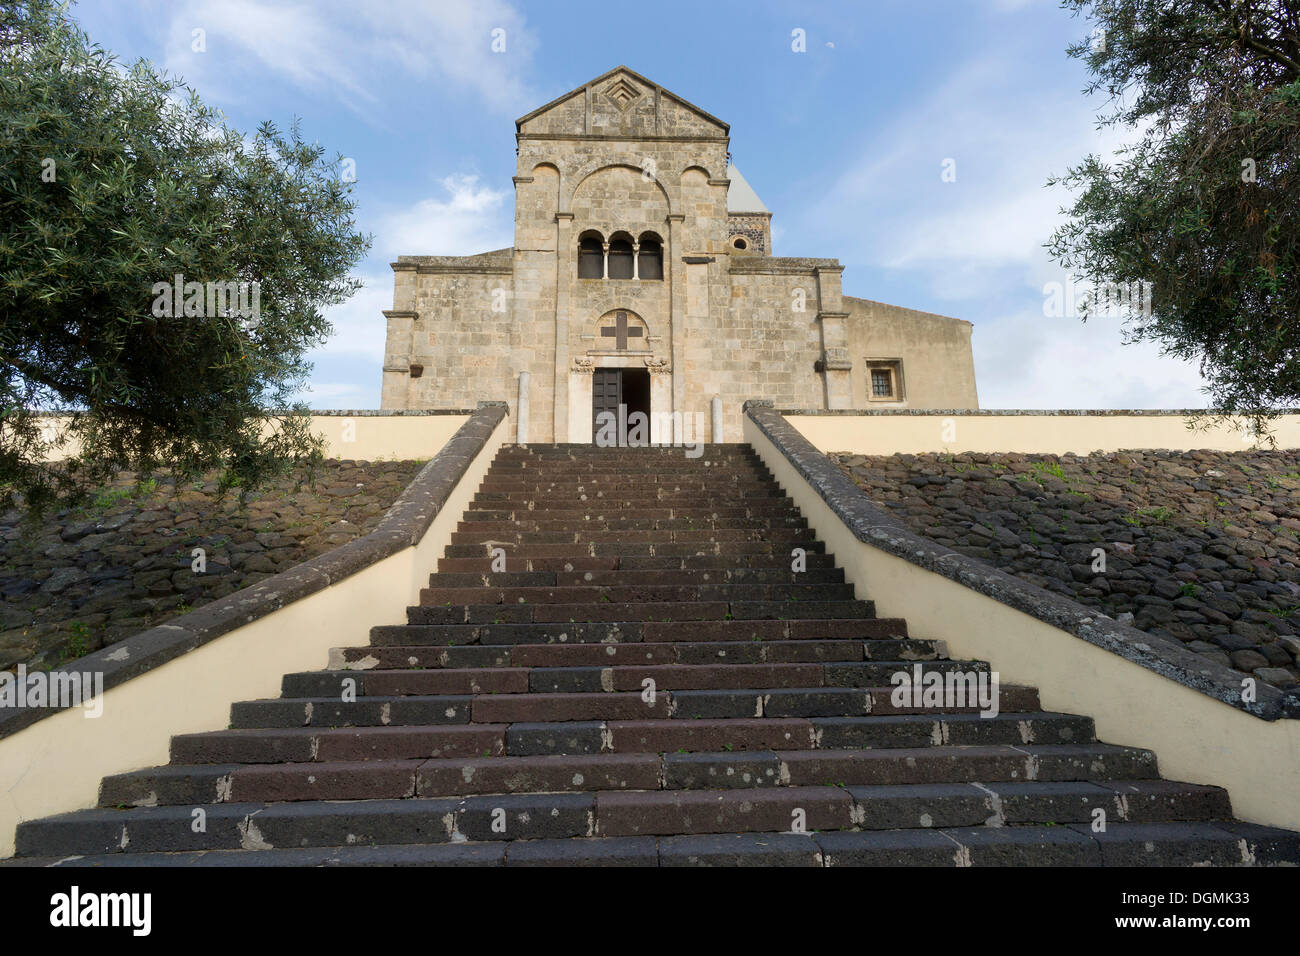 Romanesque-Pisan Cathedral of Santa Giusta from 1145, Santa Giusta, Oristano, Oristanese, Sardinia, Italy, Europe Stock Photo